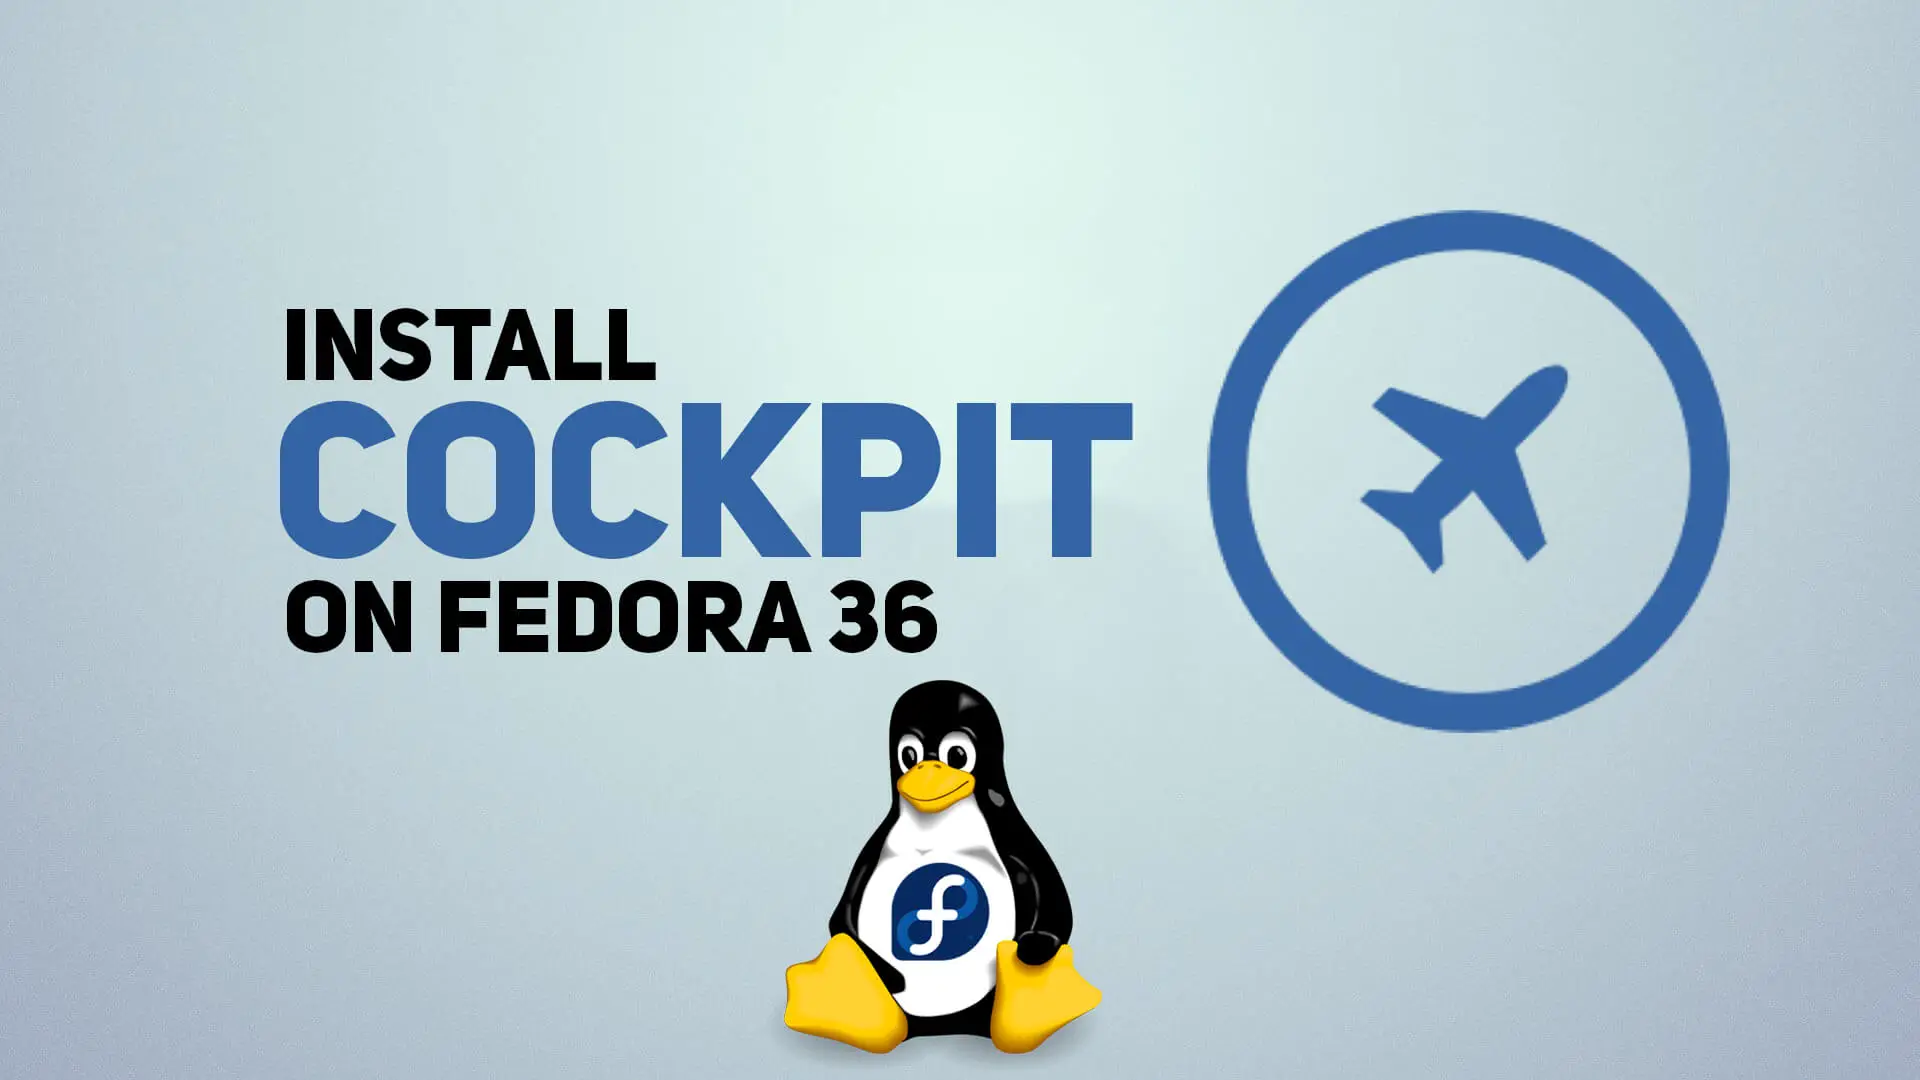 Install Cockpit on Fedora 36